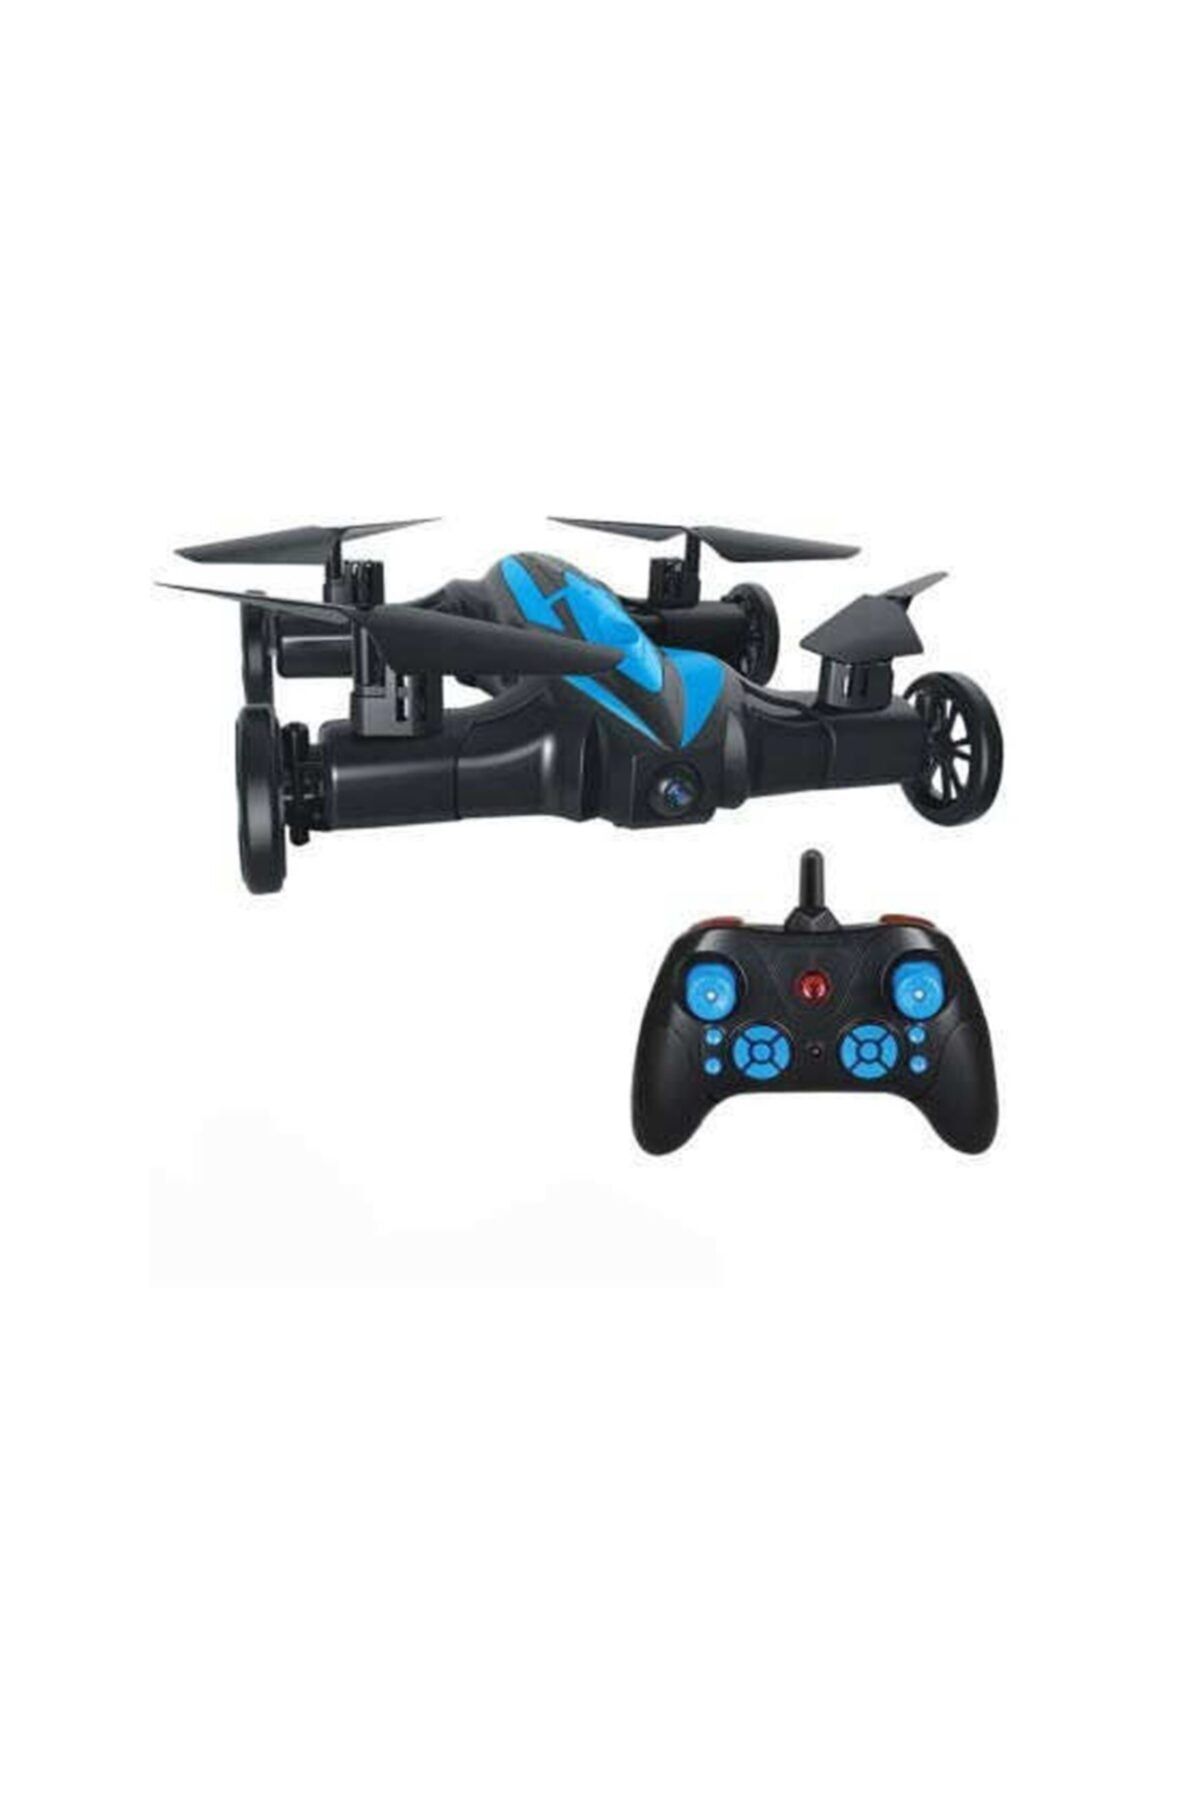 can oyuncak LH-X21 - 2 in 1, 2.4GHz 4CH 6 Axis Quadcopter RC Araba ve Drone IHA, Uçan Araba - Kamerasız Drone